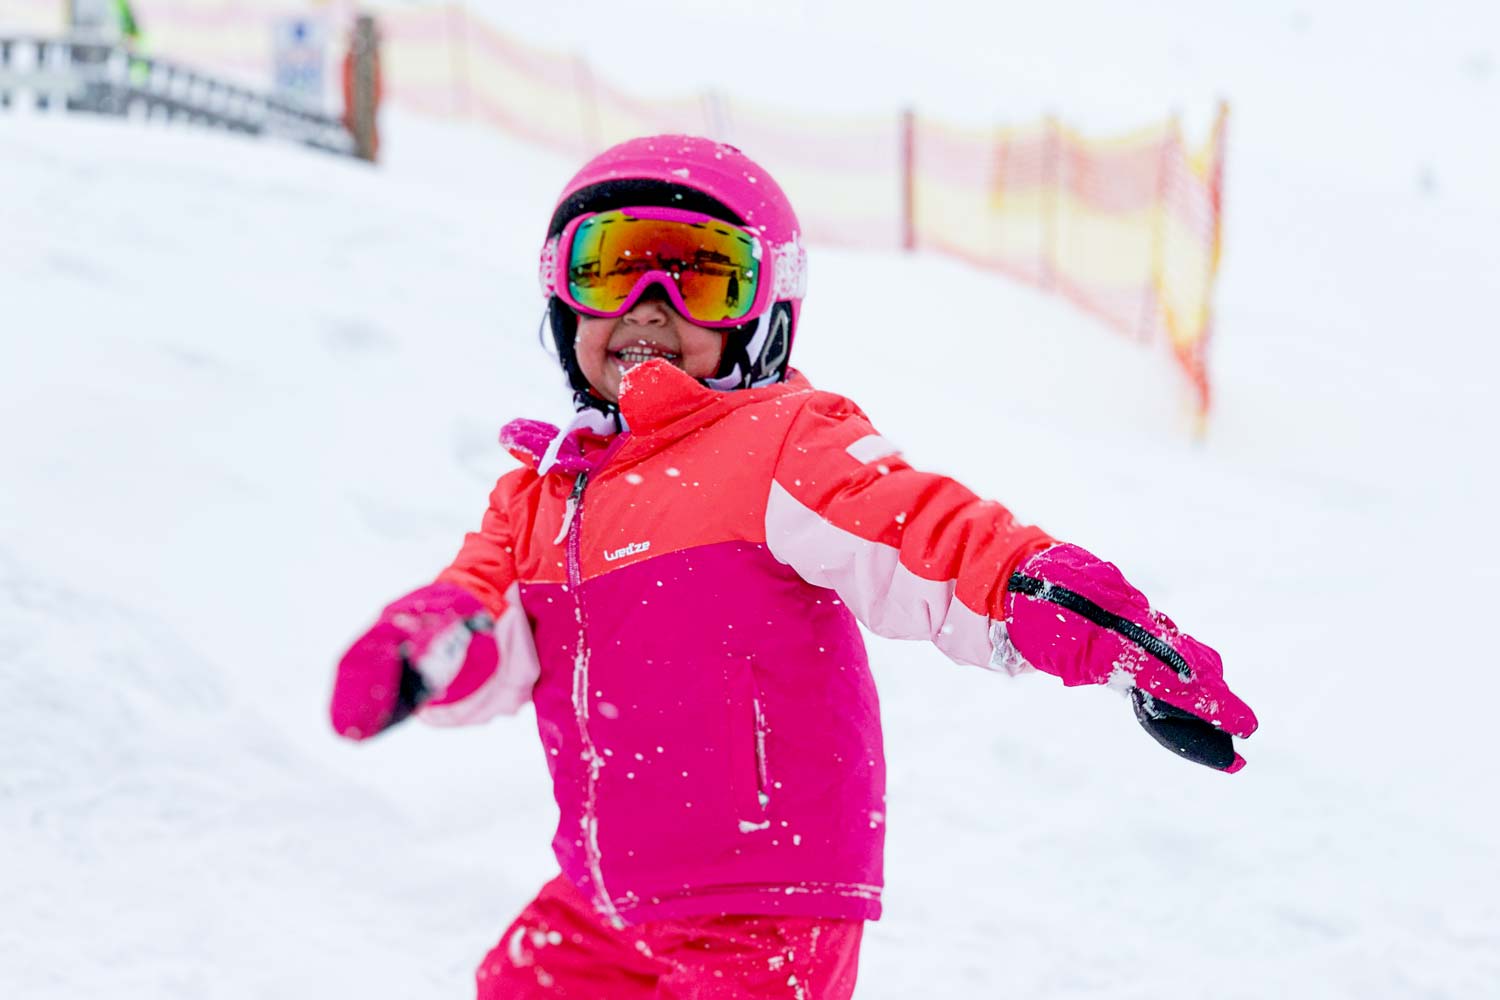 Kind in skikleding van Decathlon